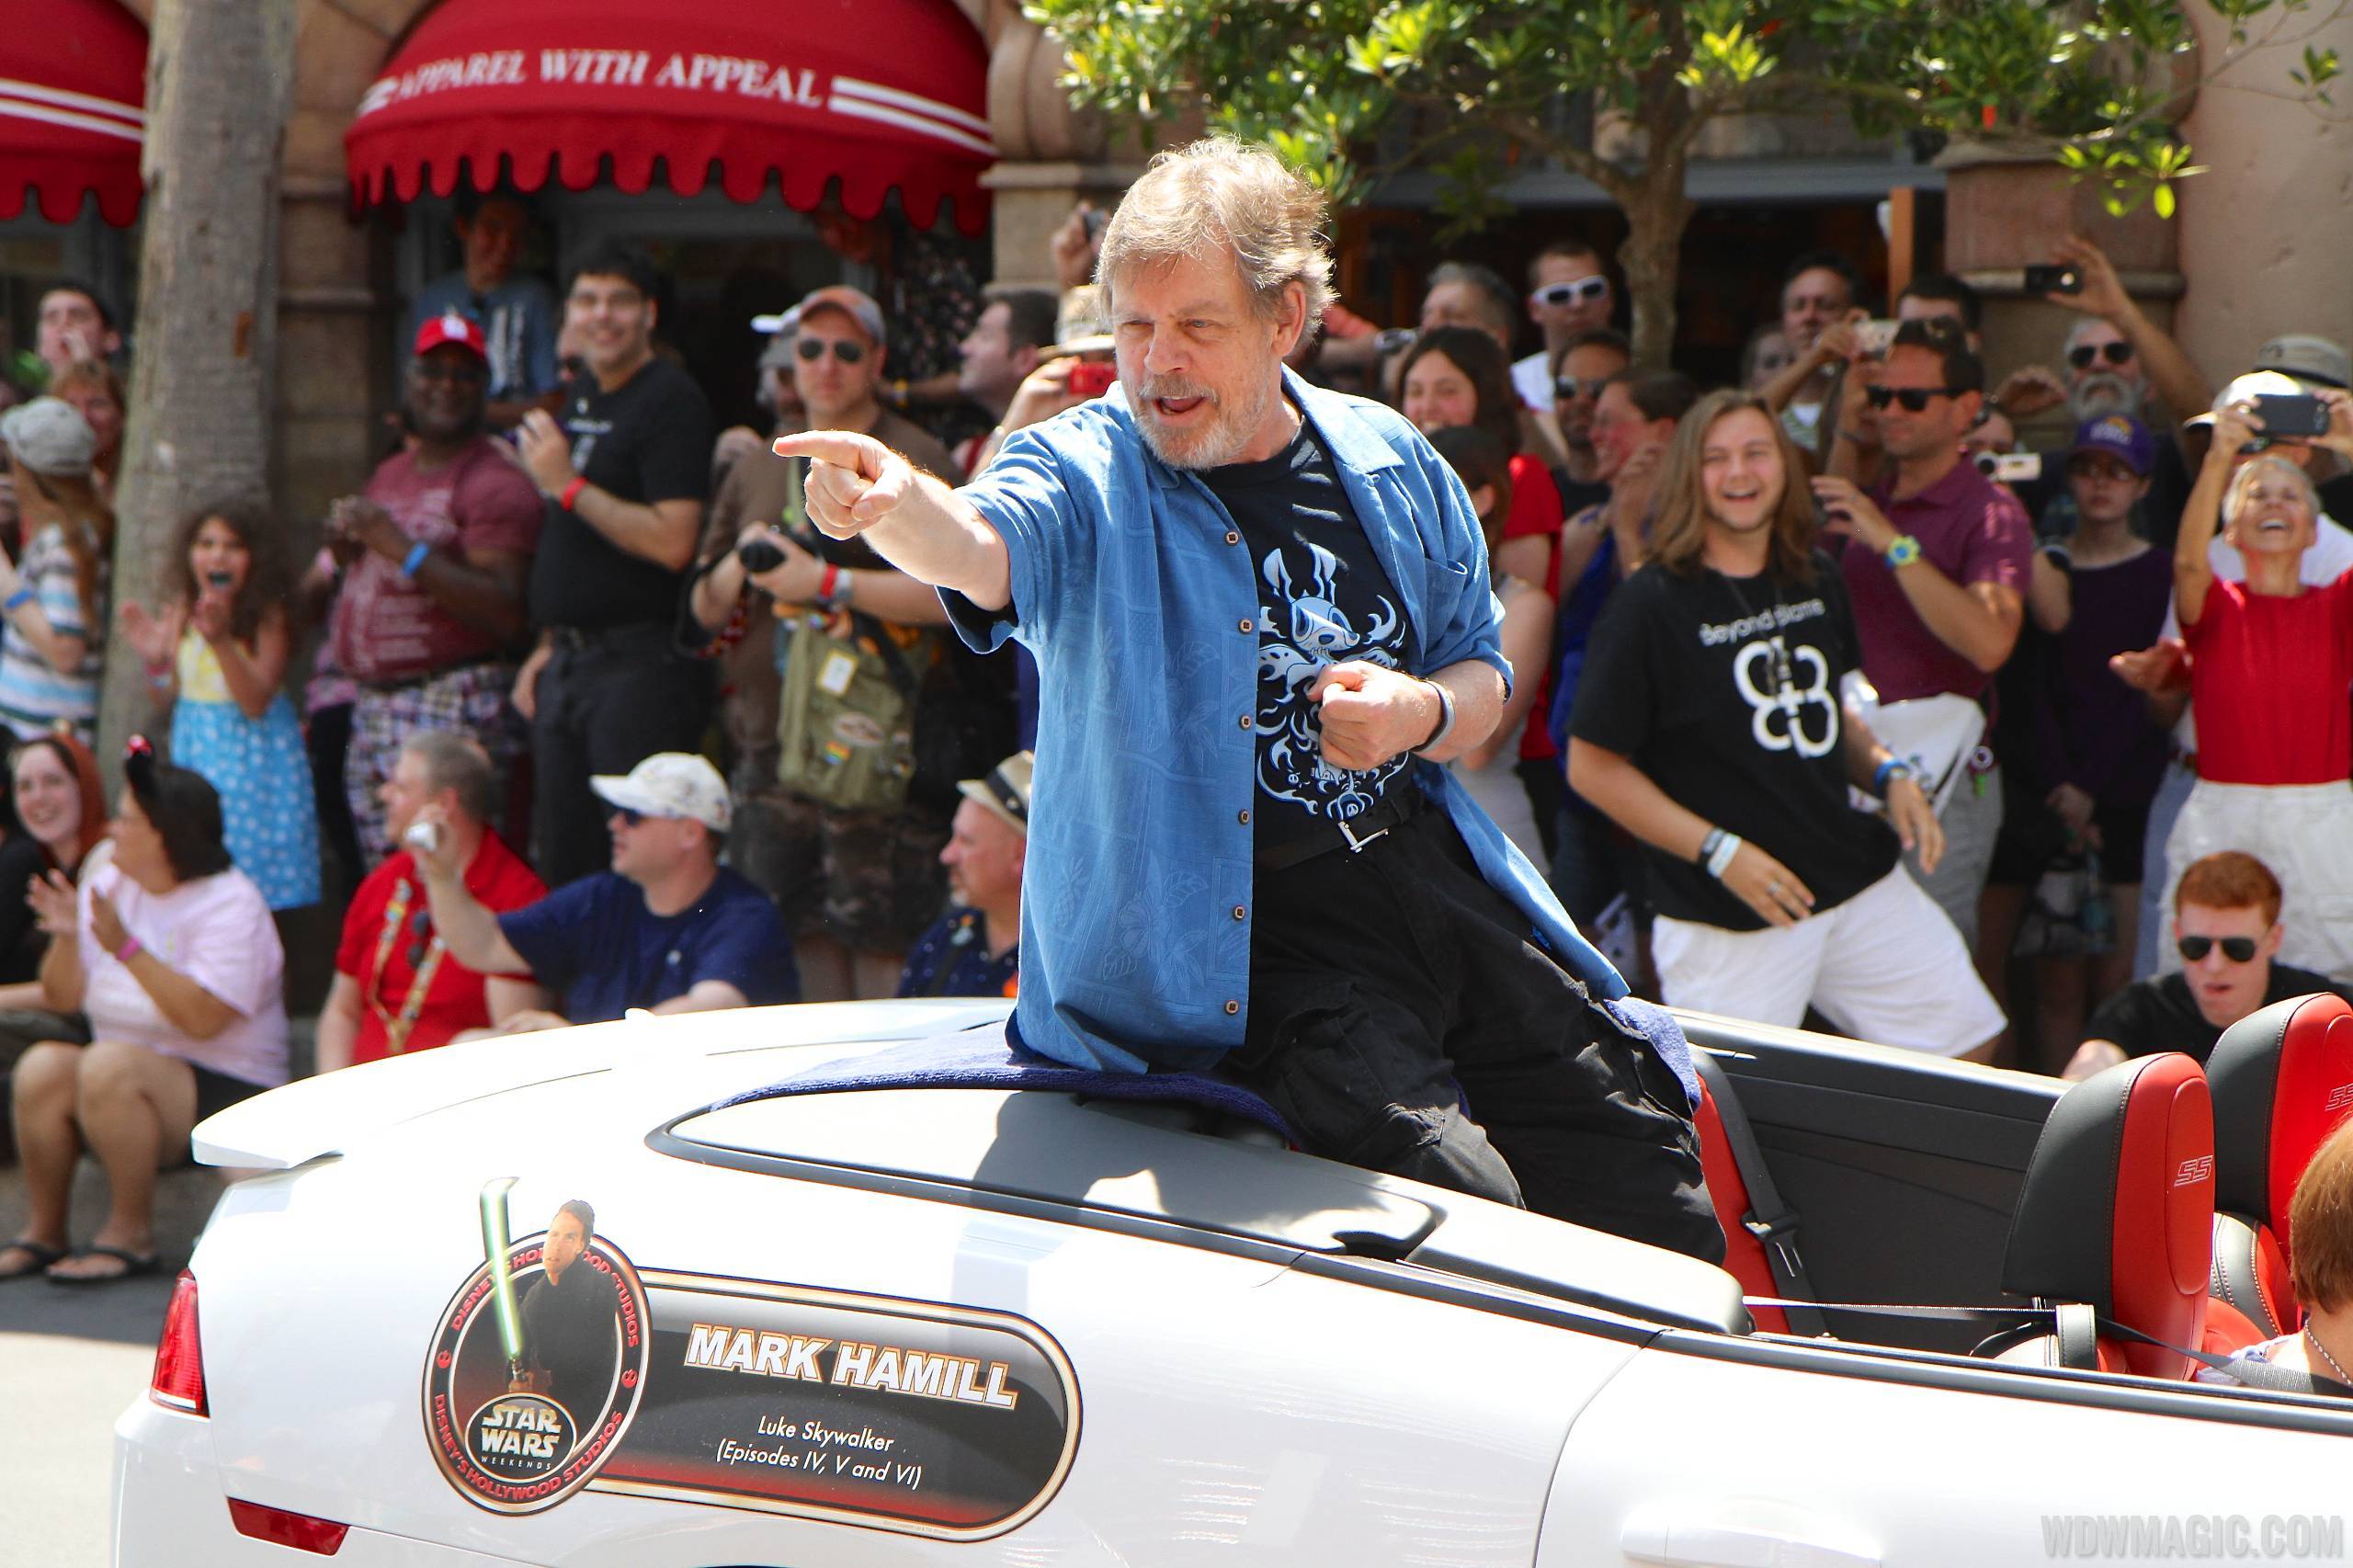 2014 Star Wars Weekends - Weekend 4 Legends of the Force motorcade celebrities - Mark Hamill